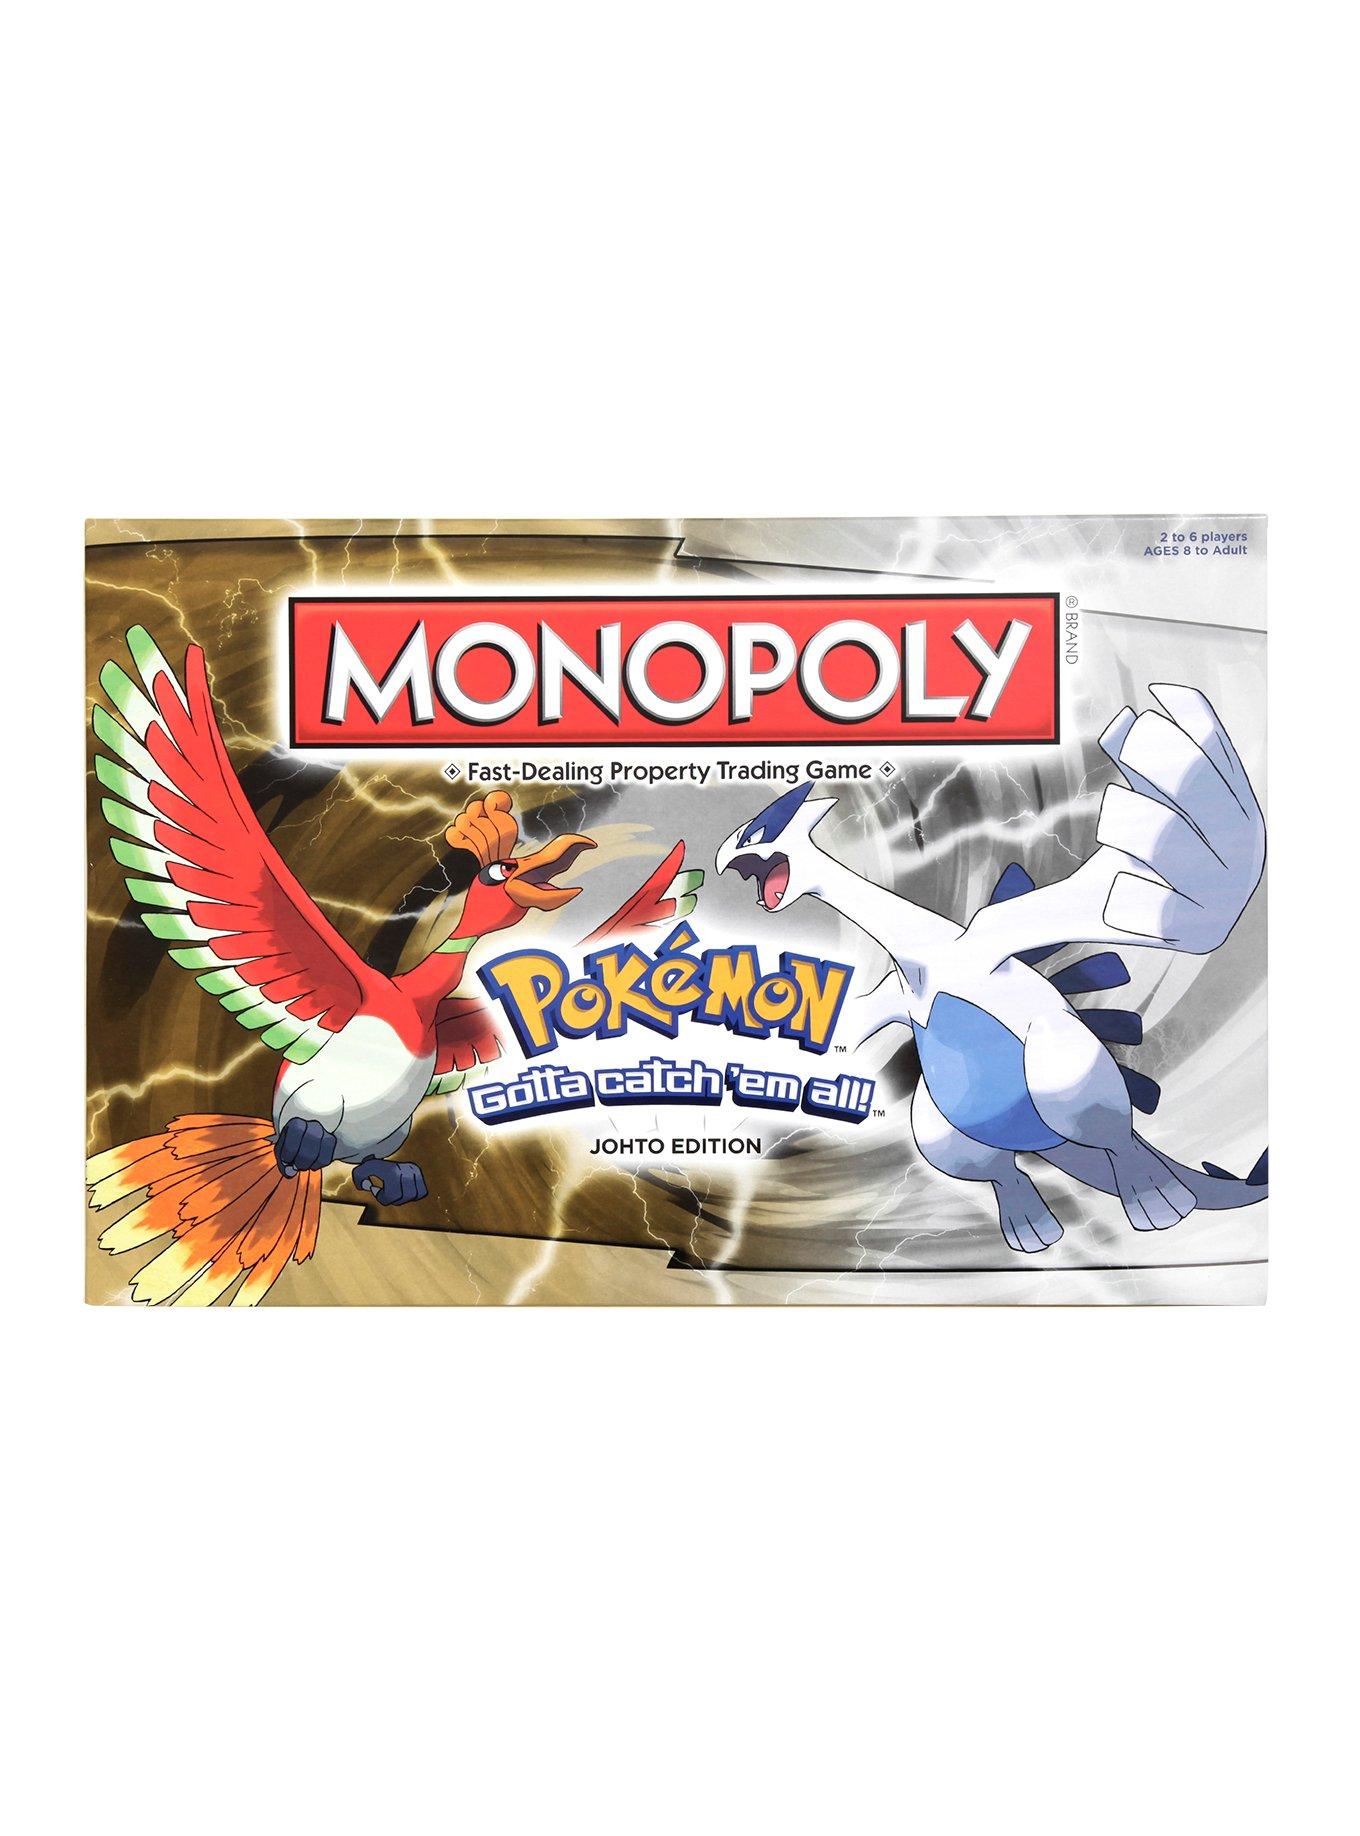 Monopoly Pokemon Edition Money & Assets Games Board Game - Pokemon